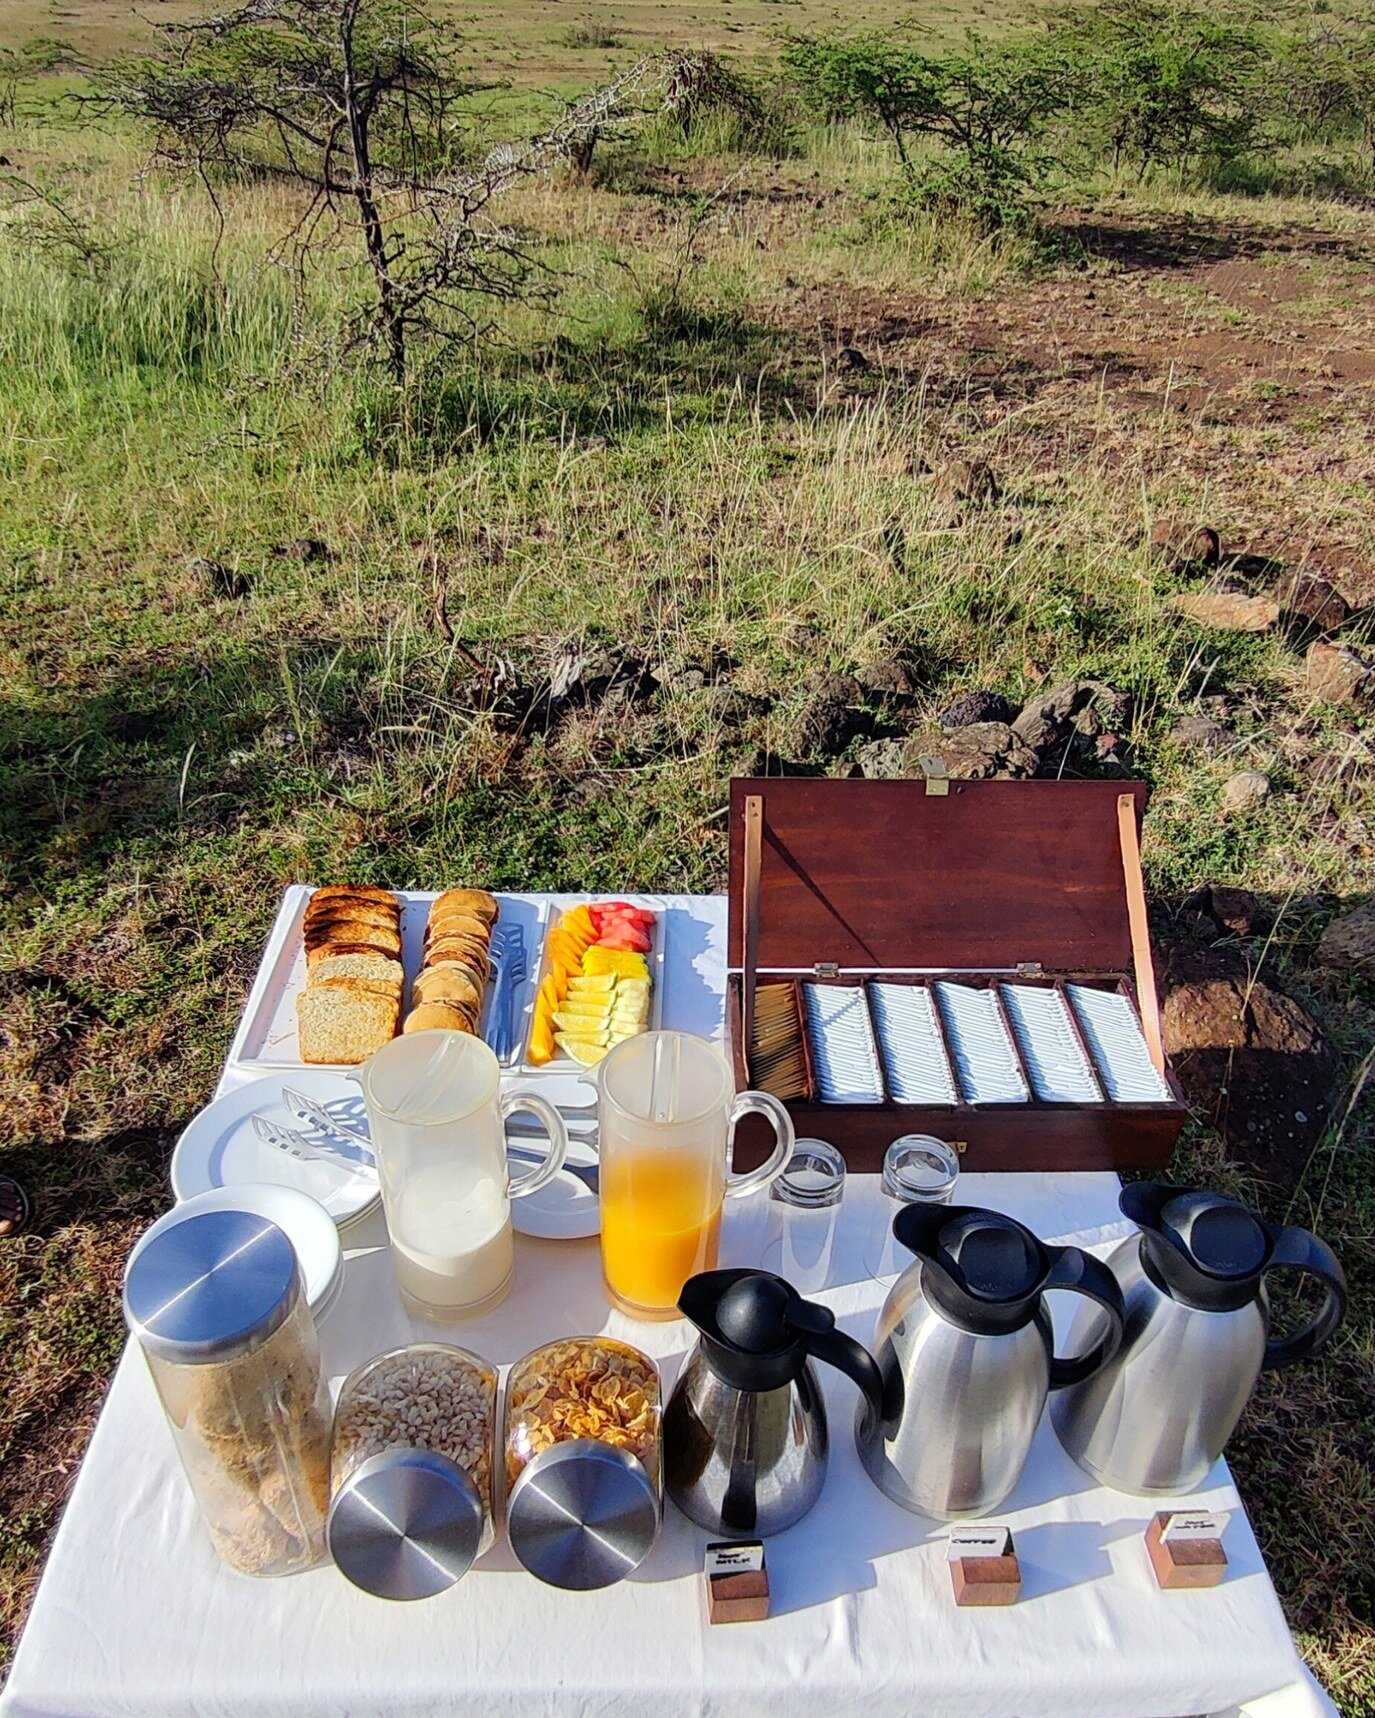 Delicious bush breakfast in the conservancy after an early morning game drive!

📸 @dev_arora 

__________________
www.kandilicamp.com
__________________
 
#safari #safaridreaming #alfresco #bucketlist #delicious #breakfast #maasai #mara #picnic #fre